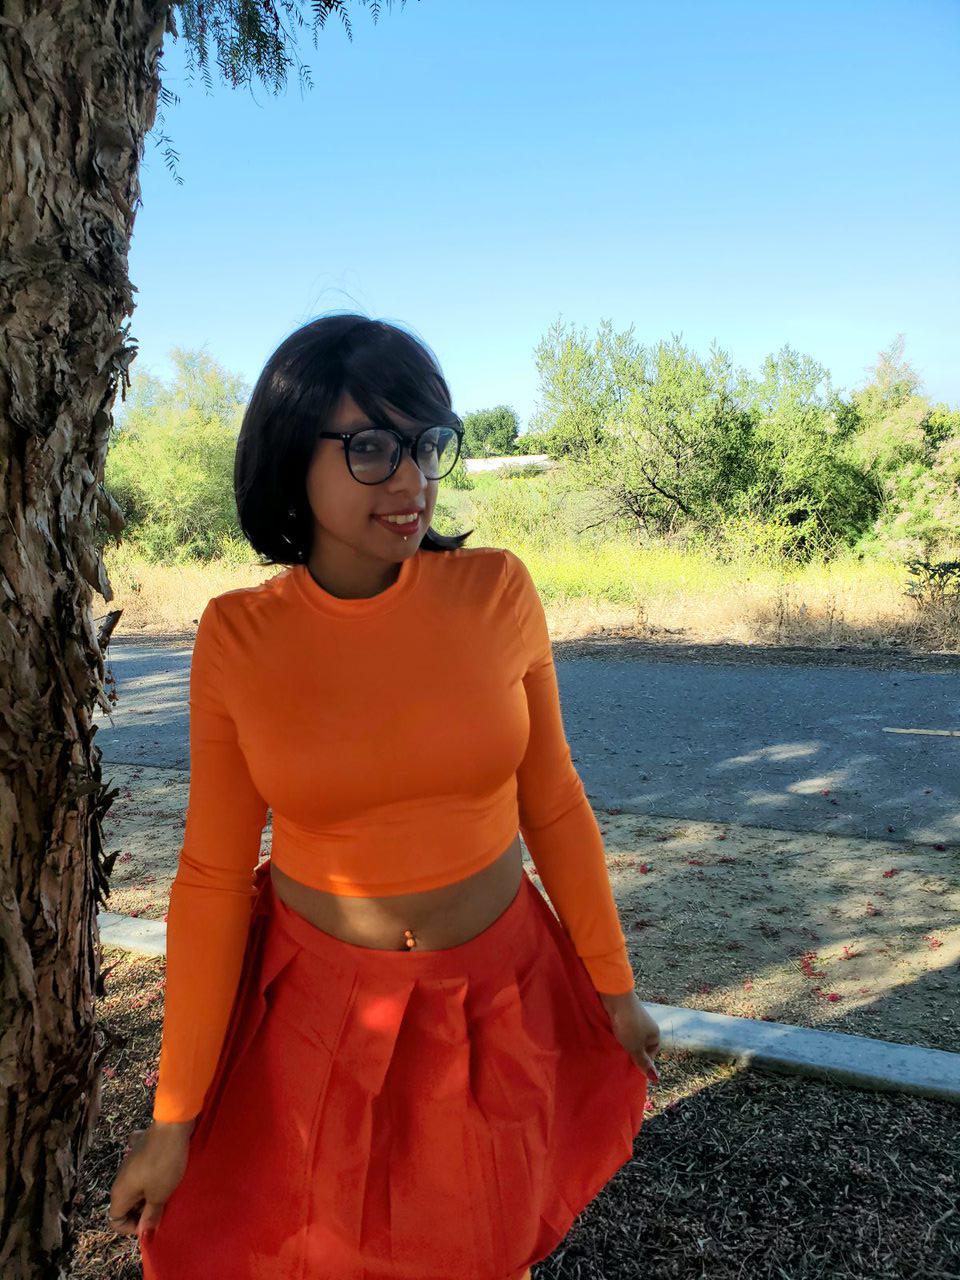 Self Velma Dinkley Scooby Doo